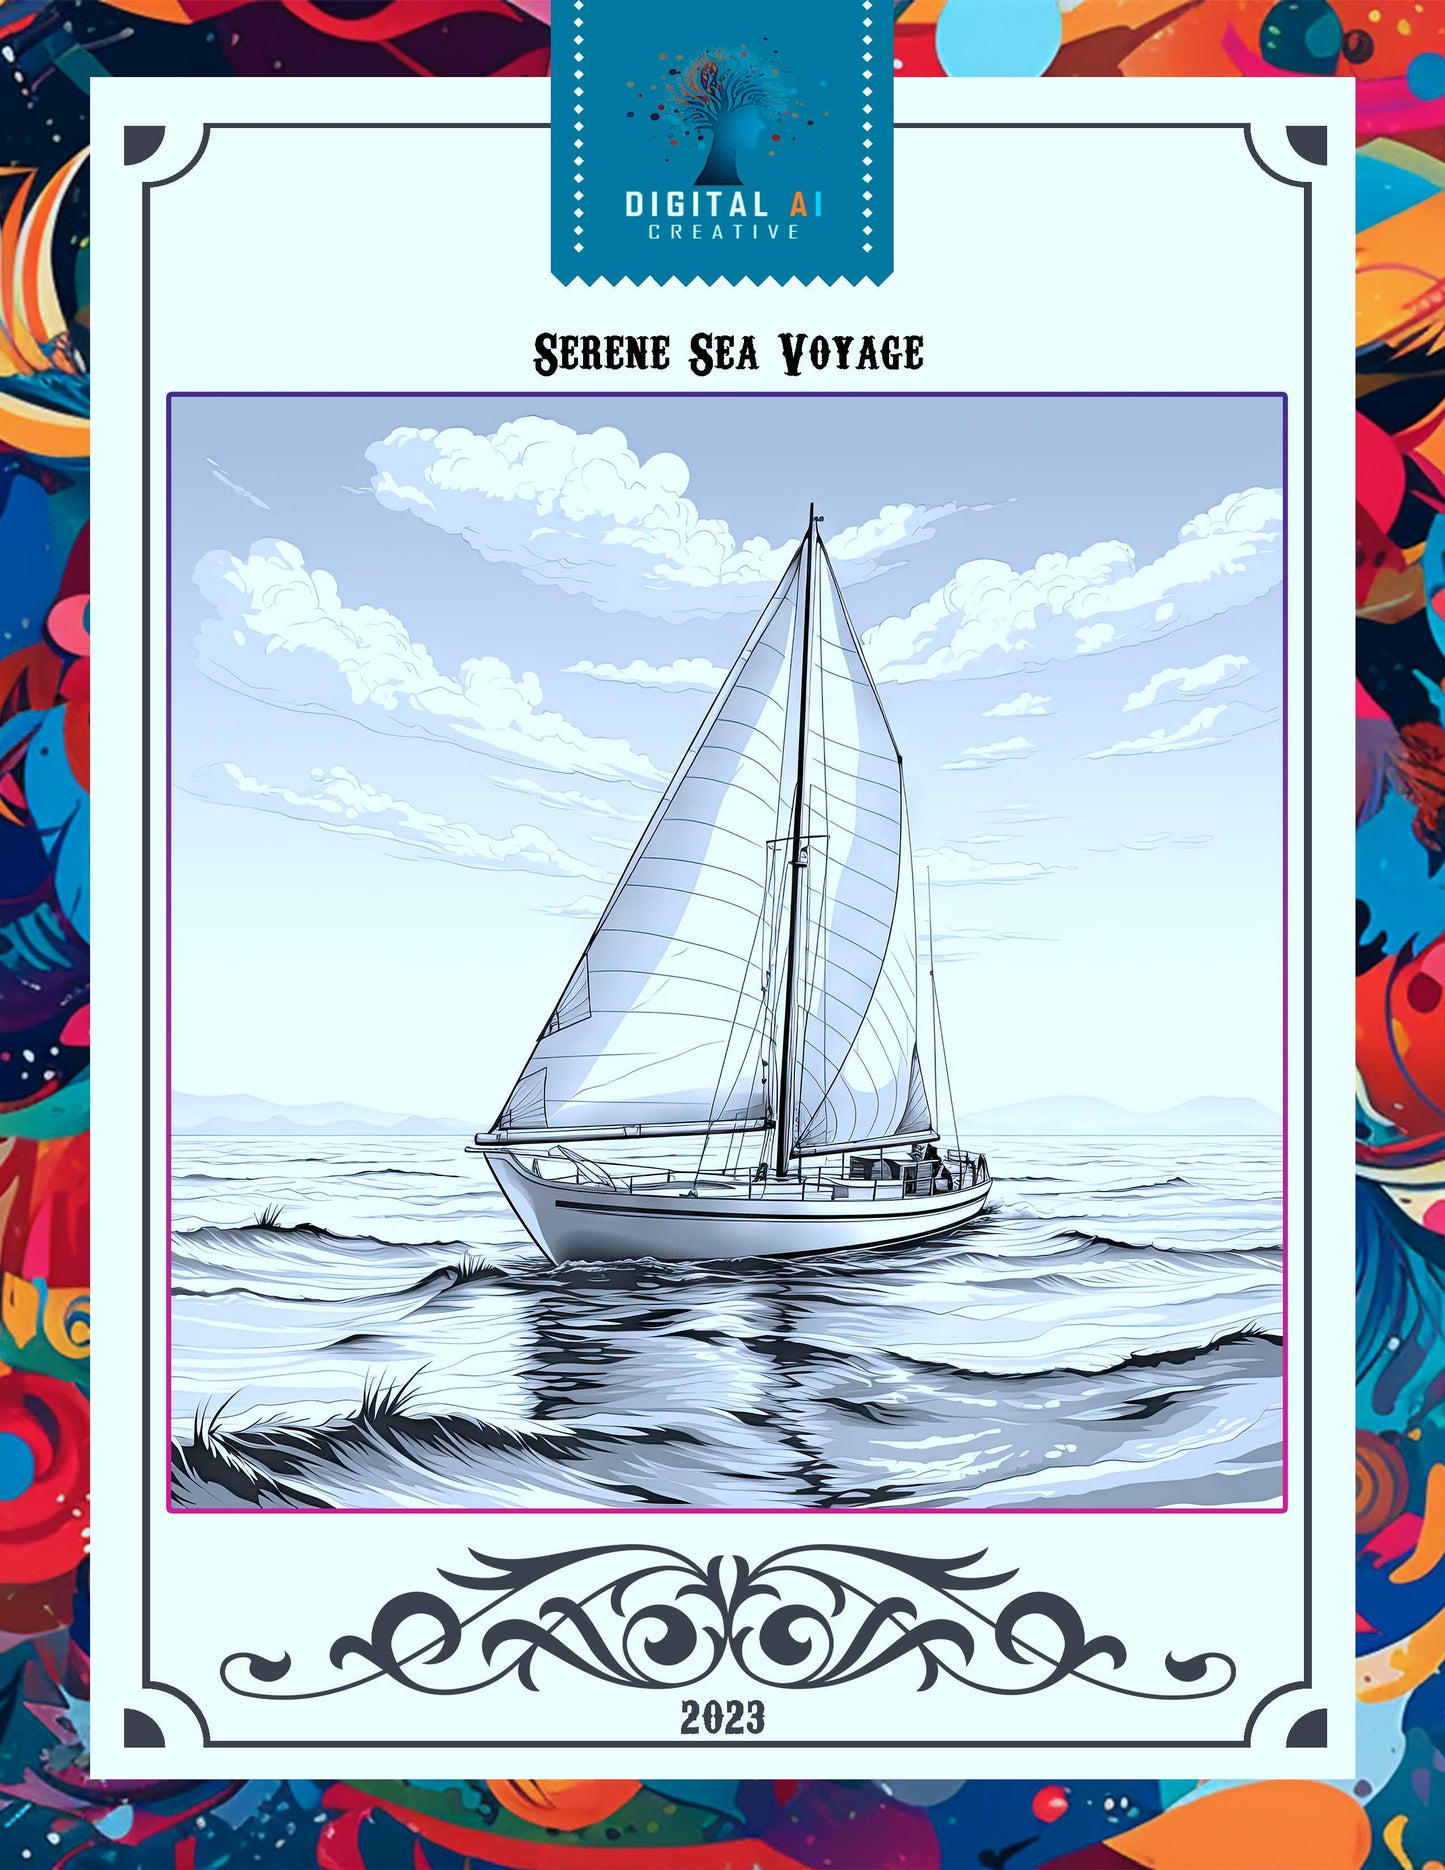 Serene Sea Voyage: A Monochrome Maritime Adventure - Coloring Book! - By Digital AI Creative